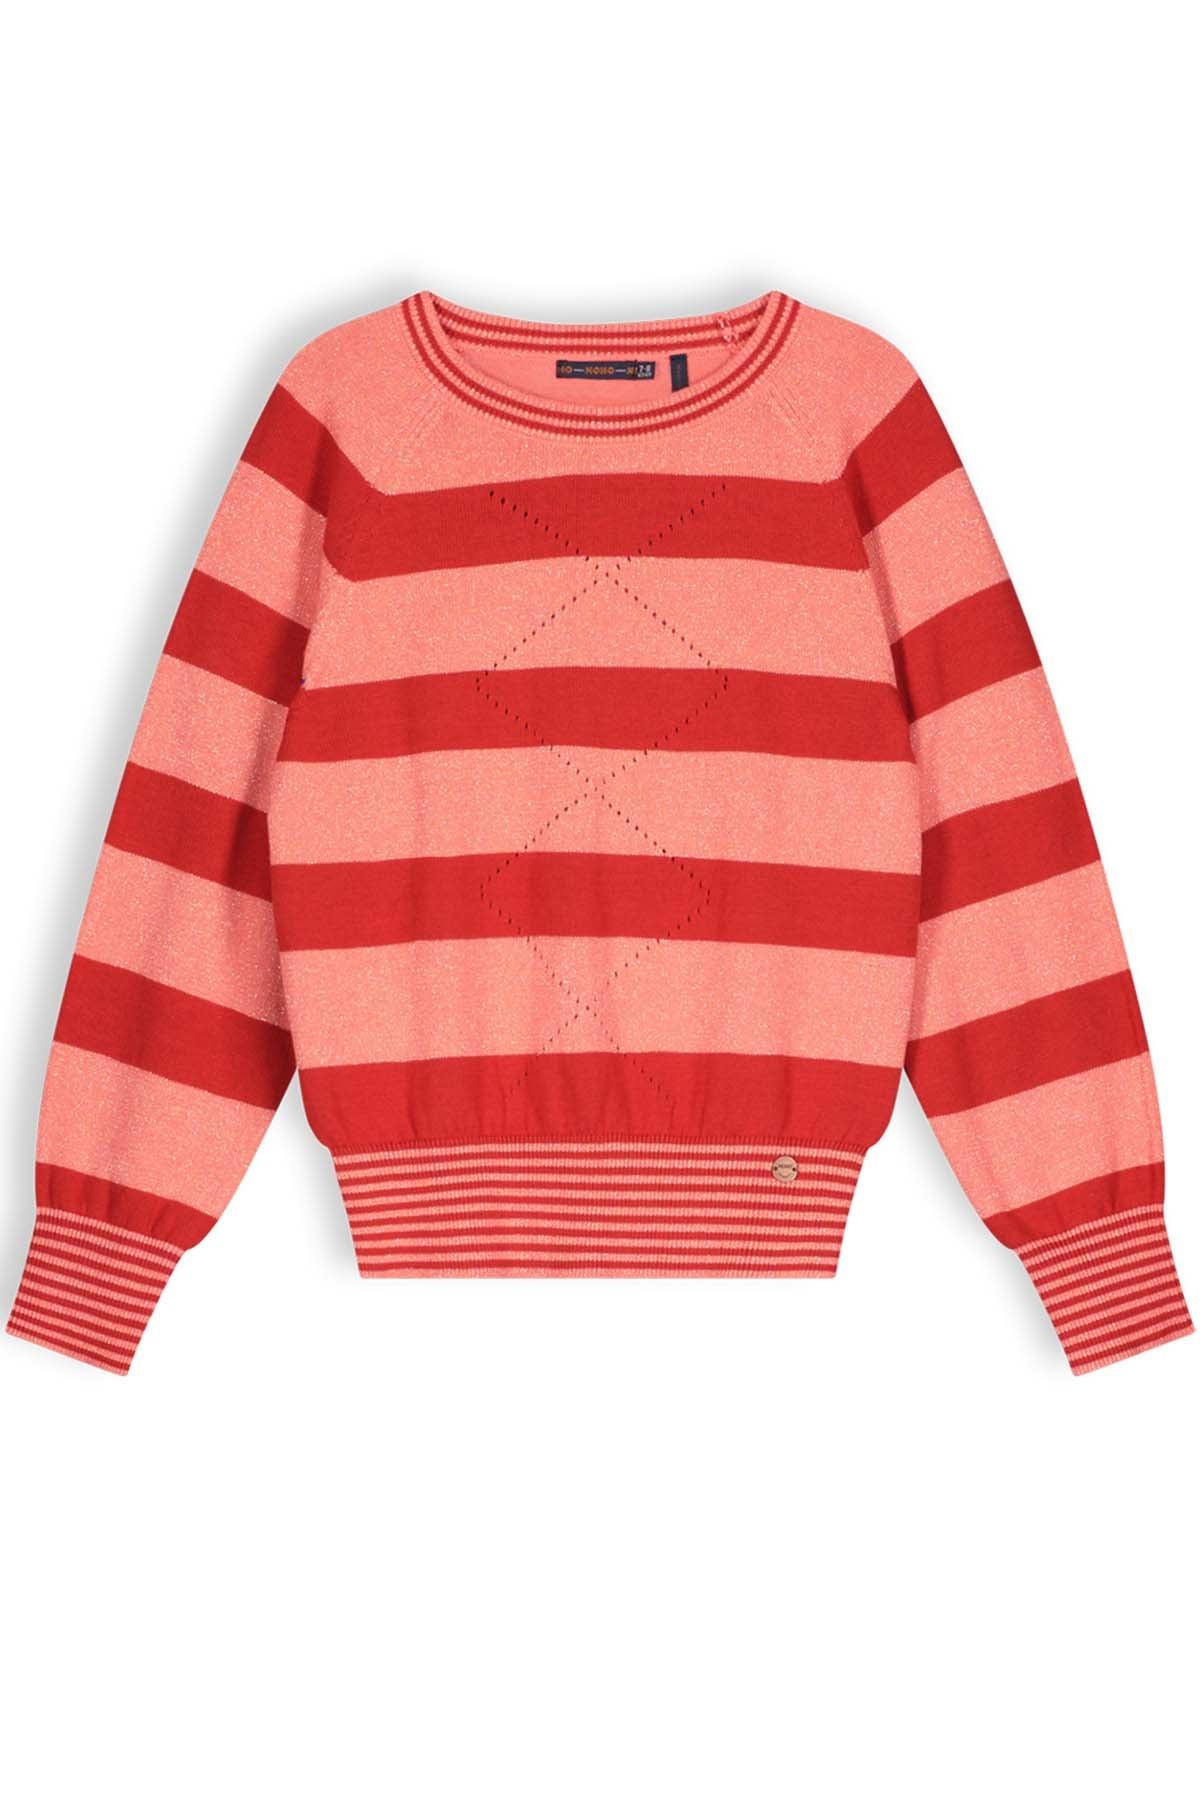 Sweater Kulia